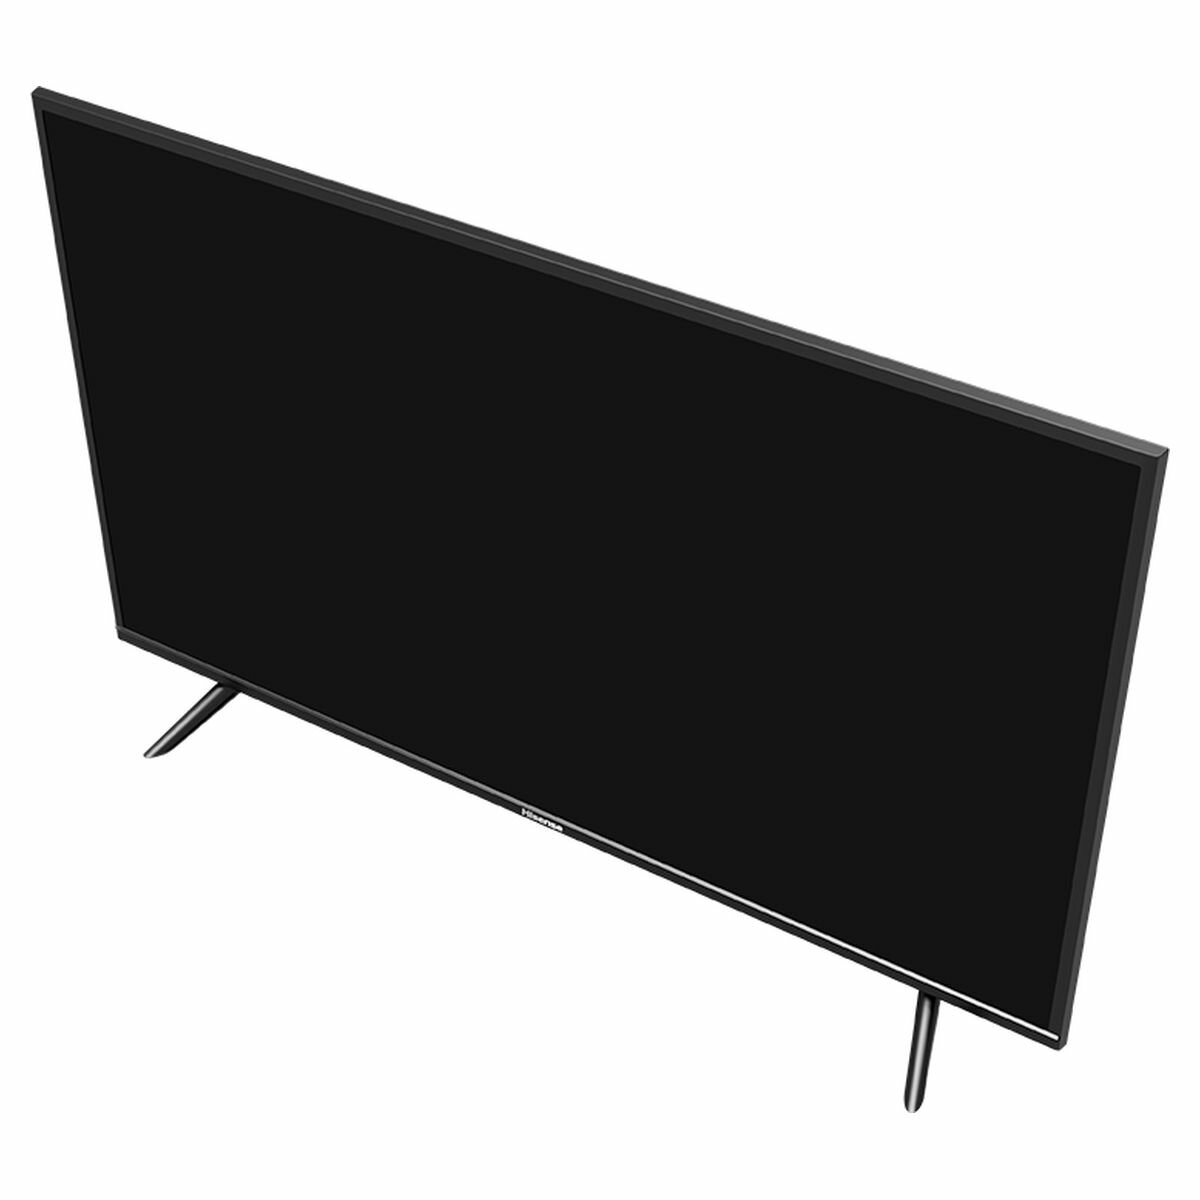 NEW Hisense 40 Inch Series 4 Full HD Smart LED TV 40R4 | eBay